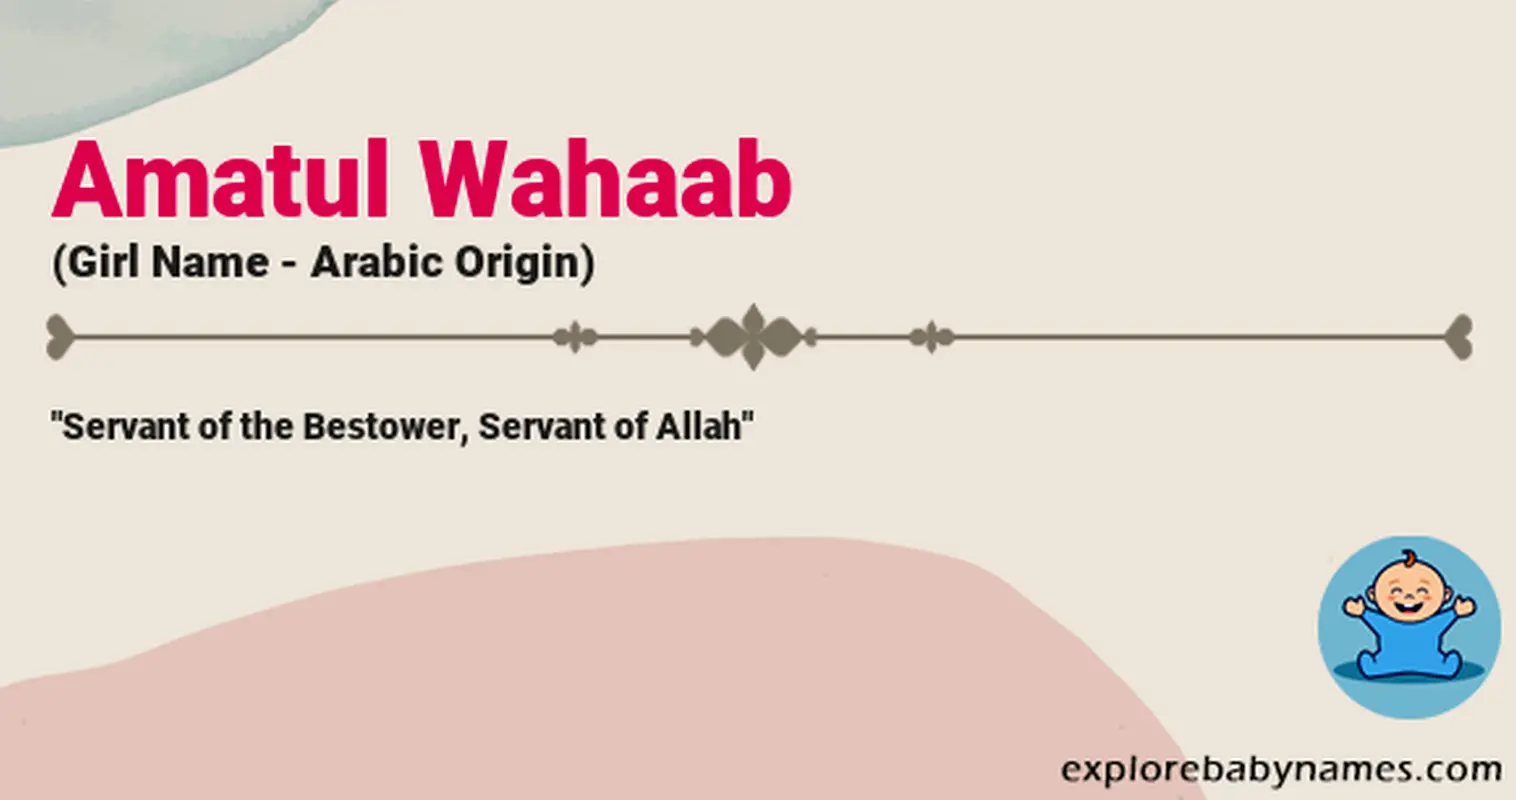 Meaning of Amatul Wahaab